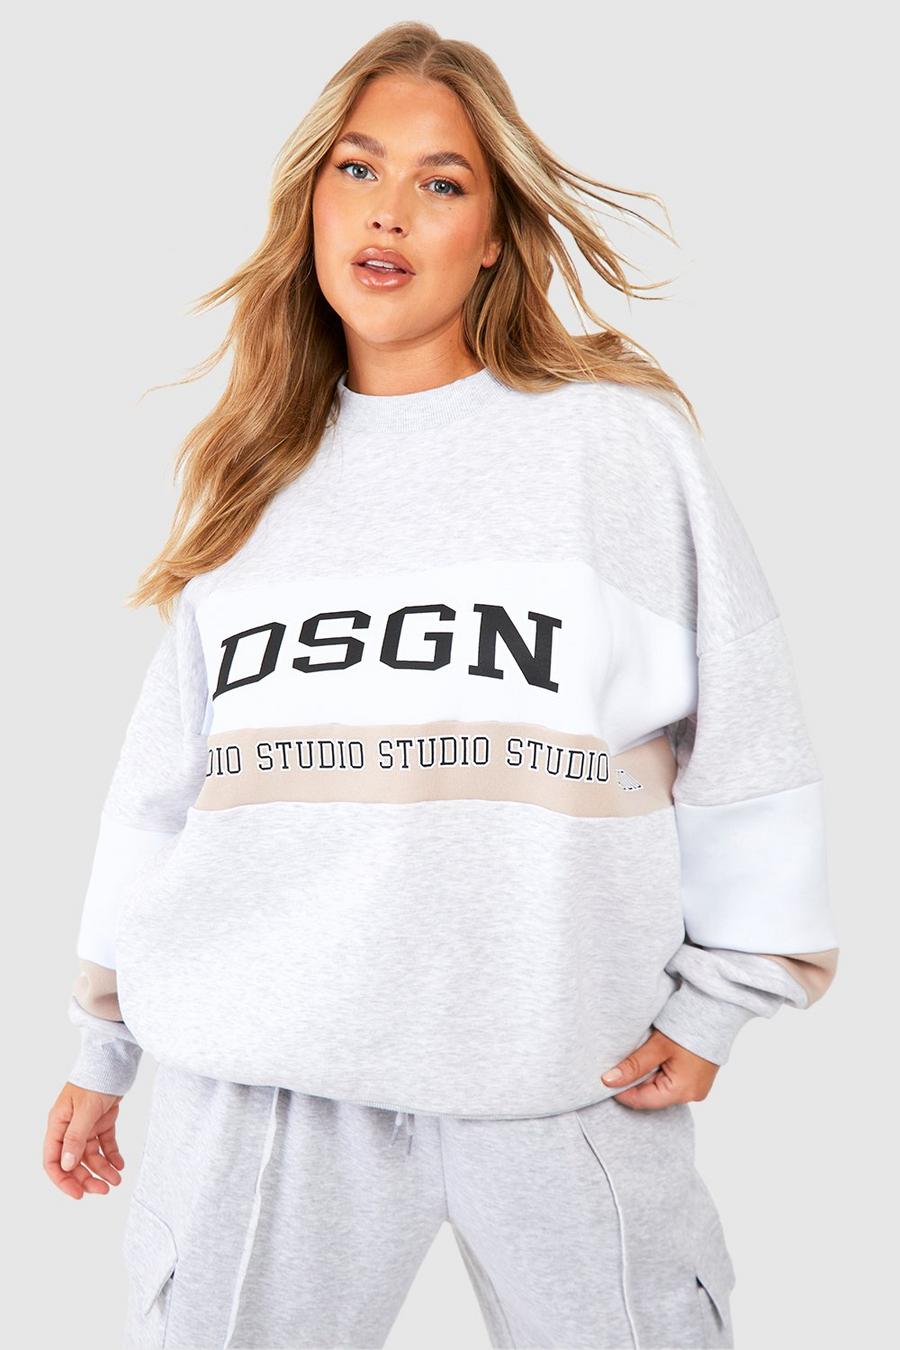 Plus Sweatshirt mit Dsgn Studio Colorblock Print, Ash grey